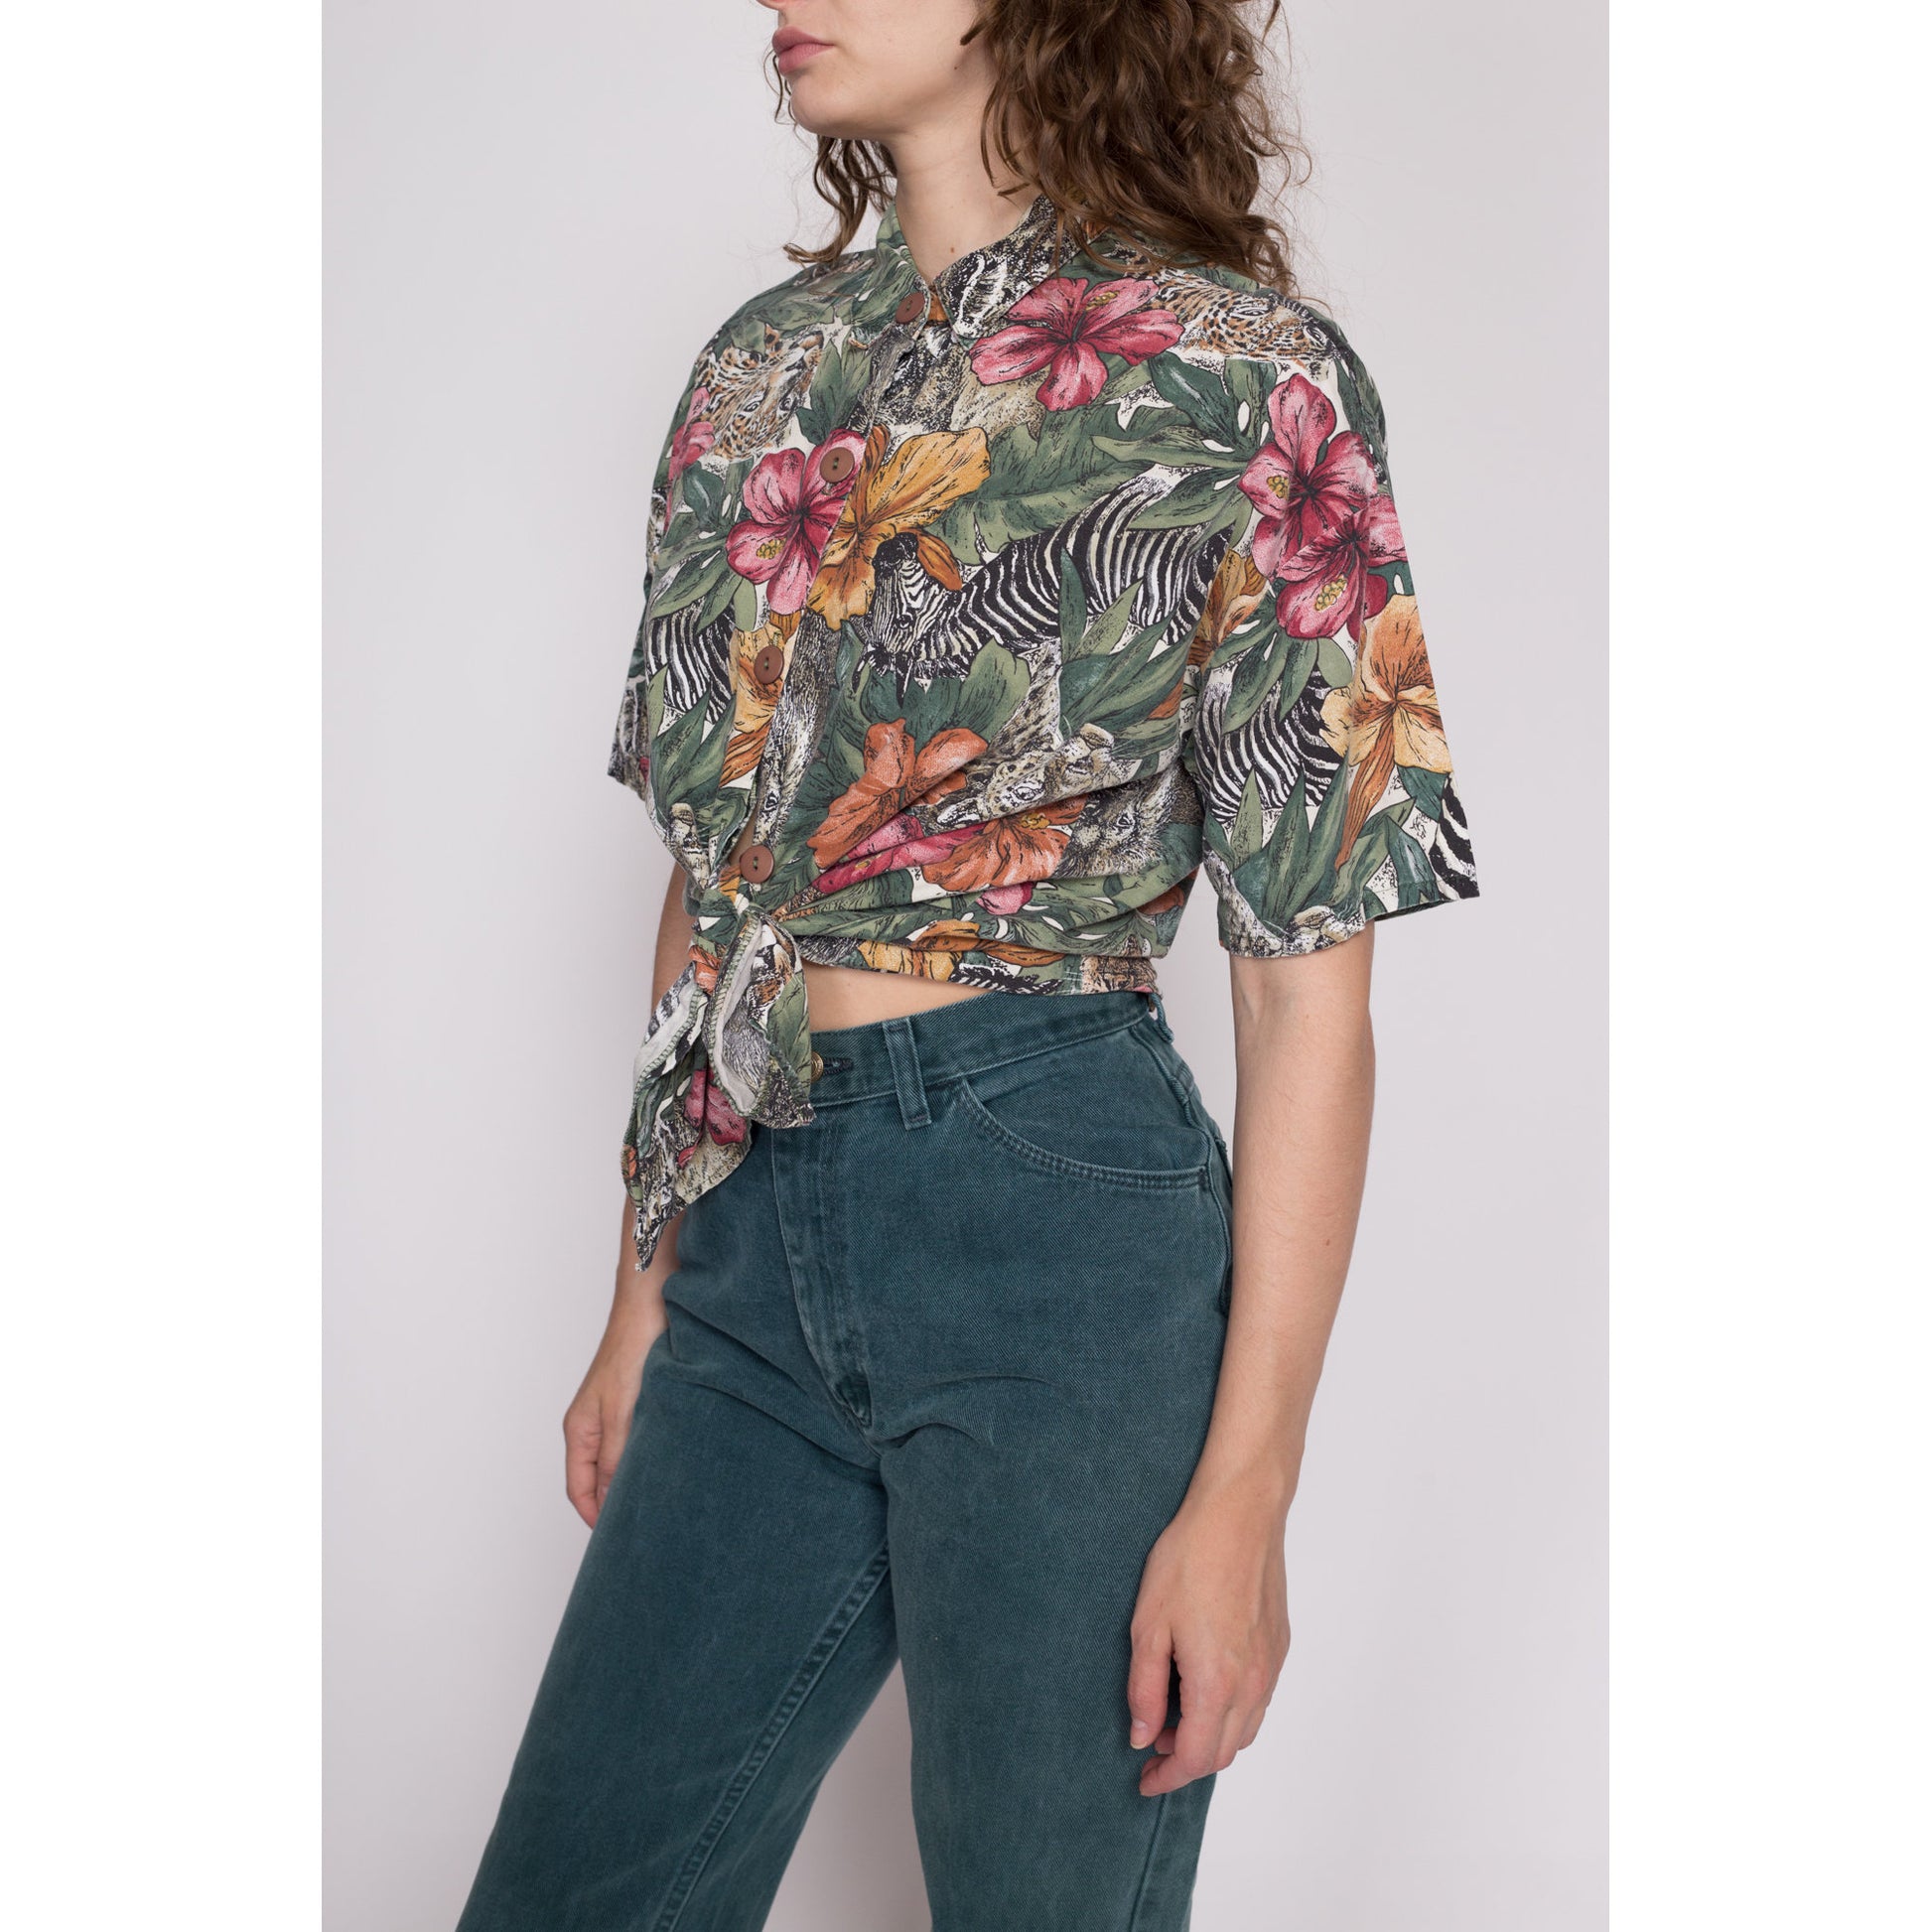 M| 90s African Animal Tropical Floral Shirt - Medium | Vintage Button Up Short Sleeve Collared Safari Print Top